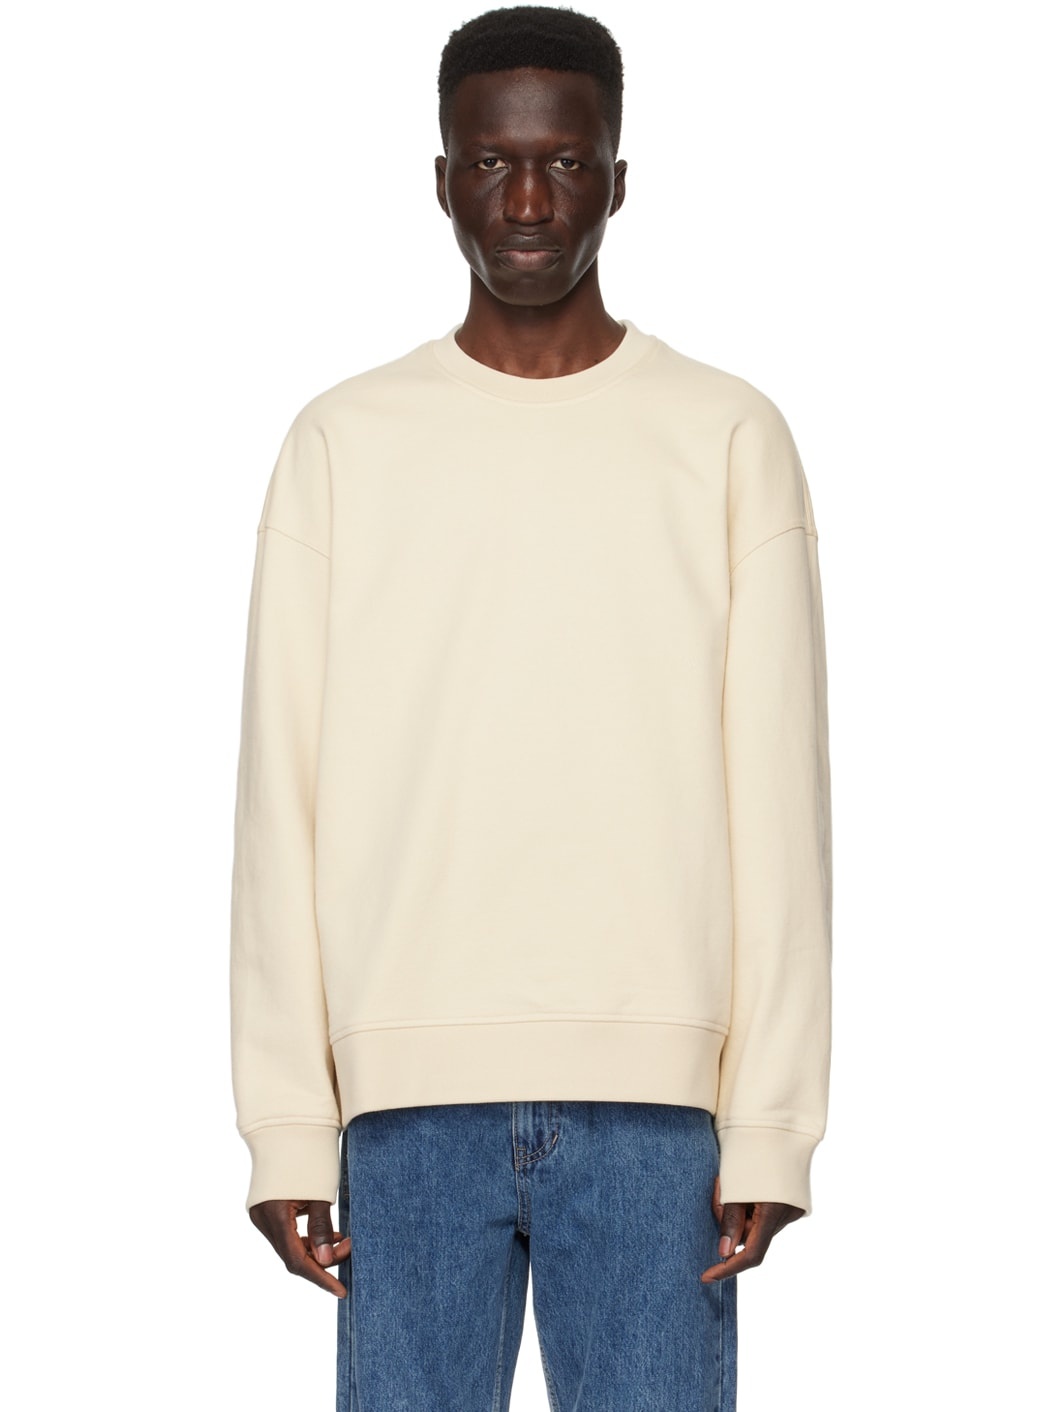 Off-White Patch Sweatshirt - 1